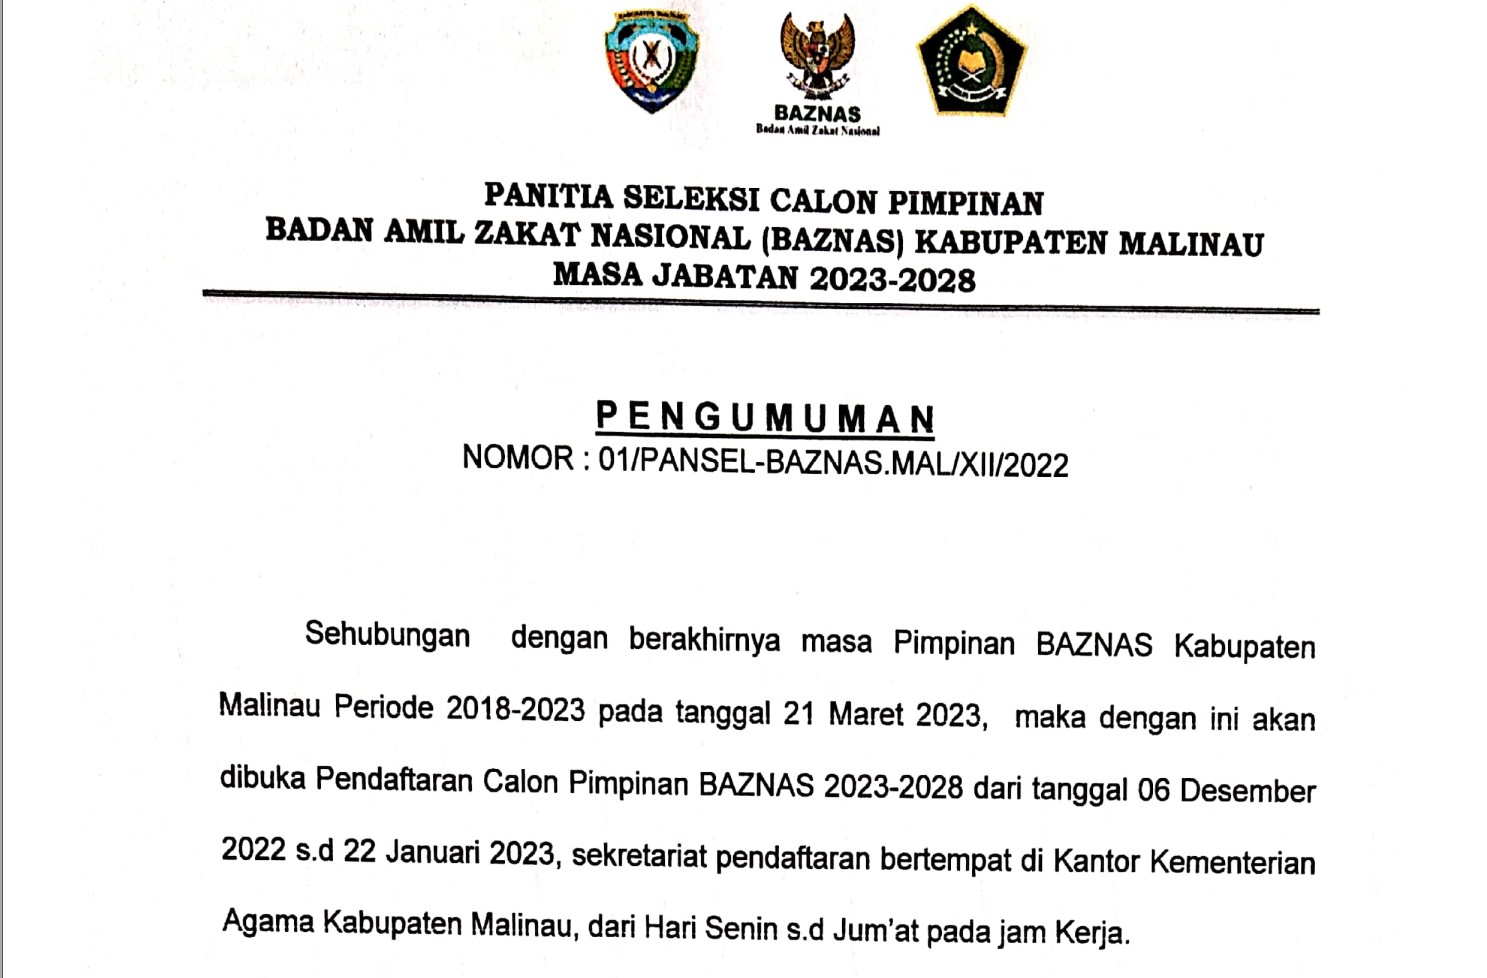 pengumuman-pendaftaran-calon-pimipinan-baznas-malinau-periode-2023-2028